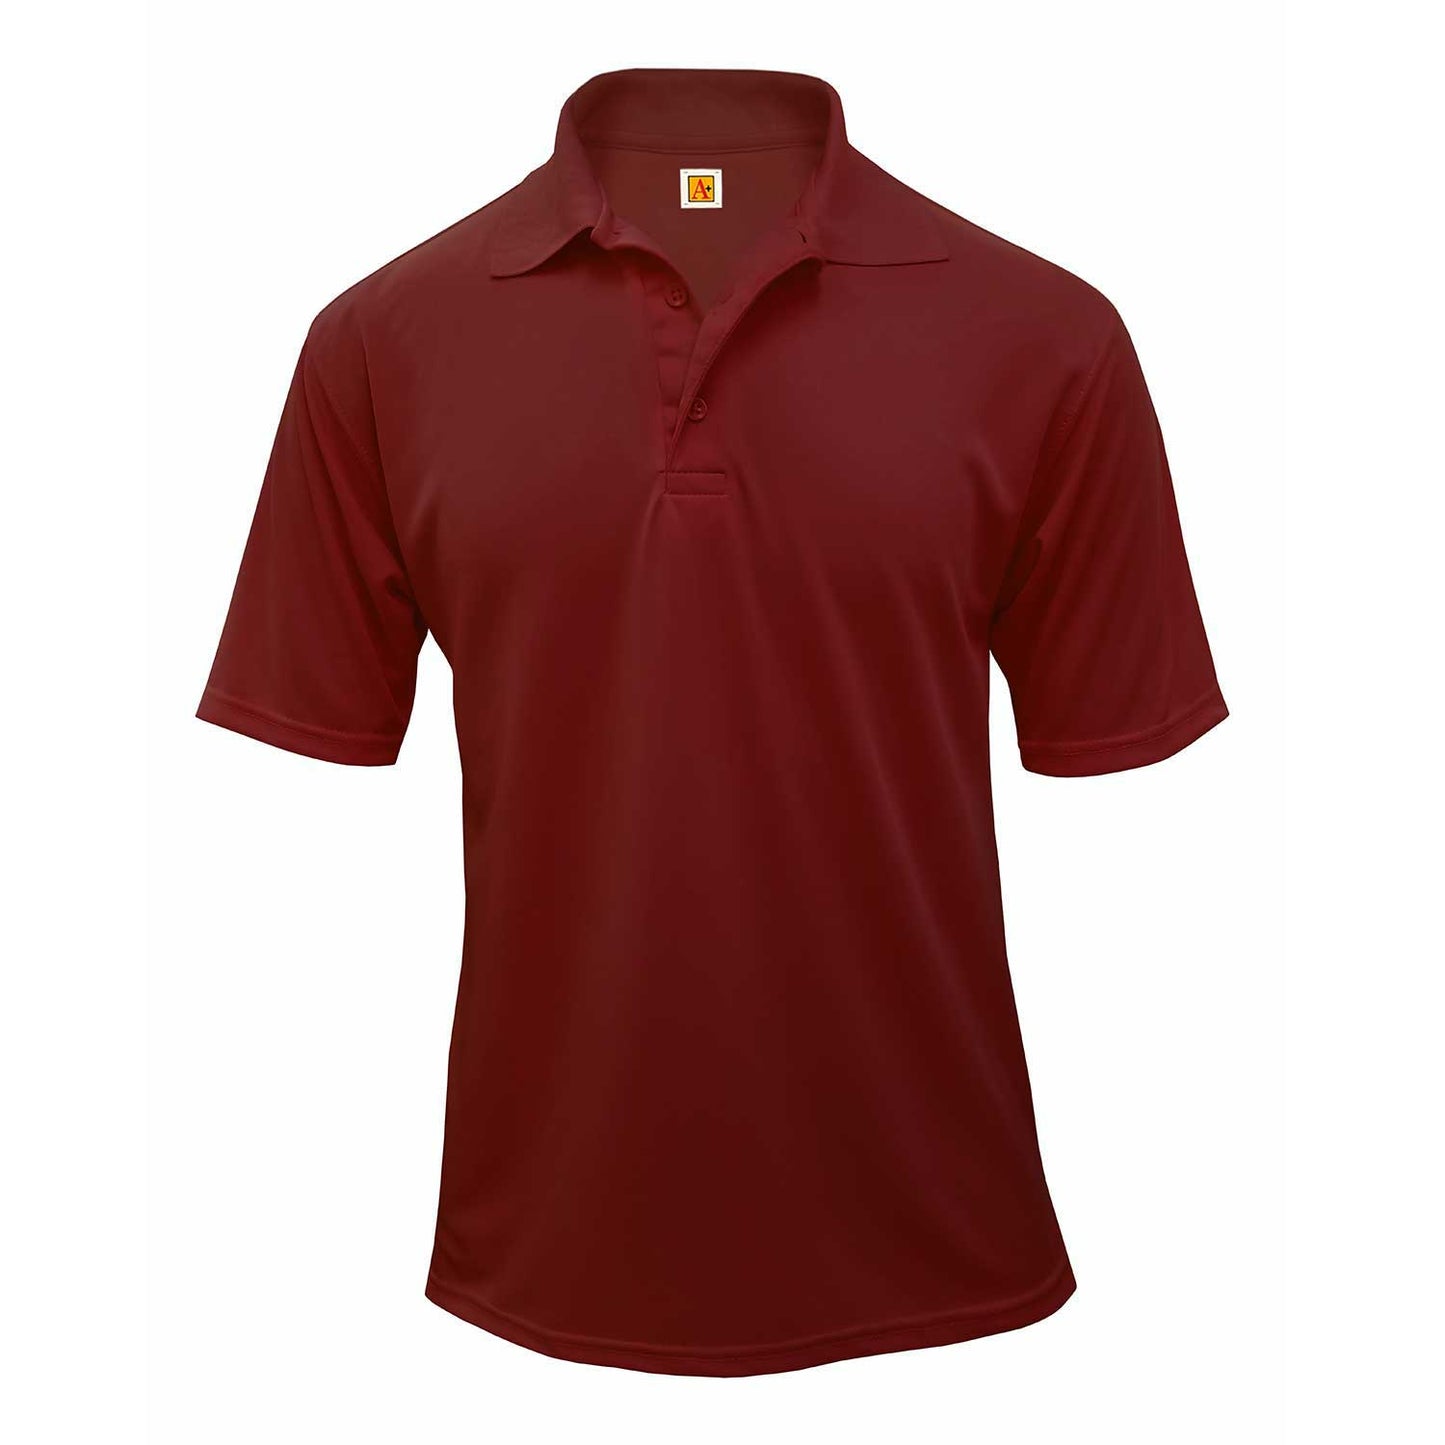 Performance Dri-fit Jersey Knit Short Sleeve Shirt (Unisex) w/Logo - 1105